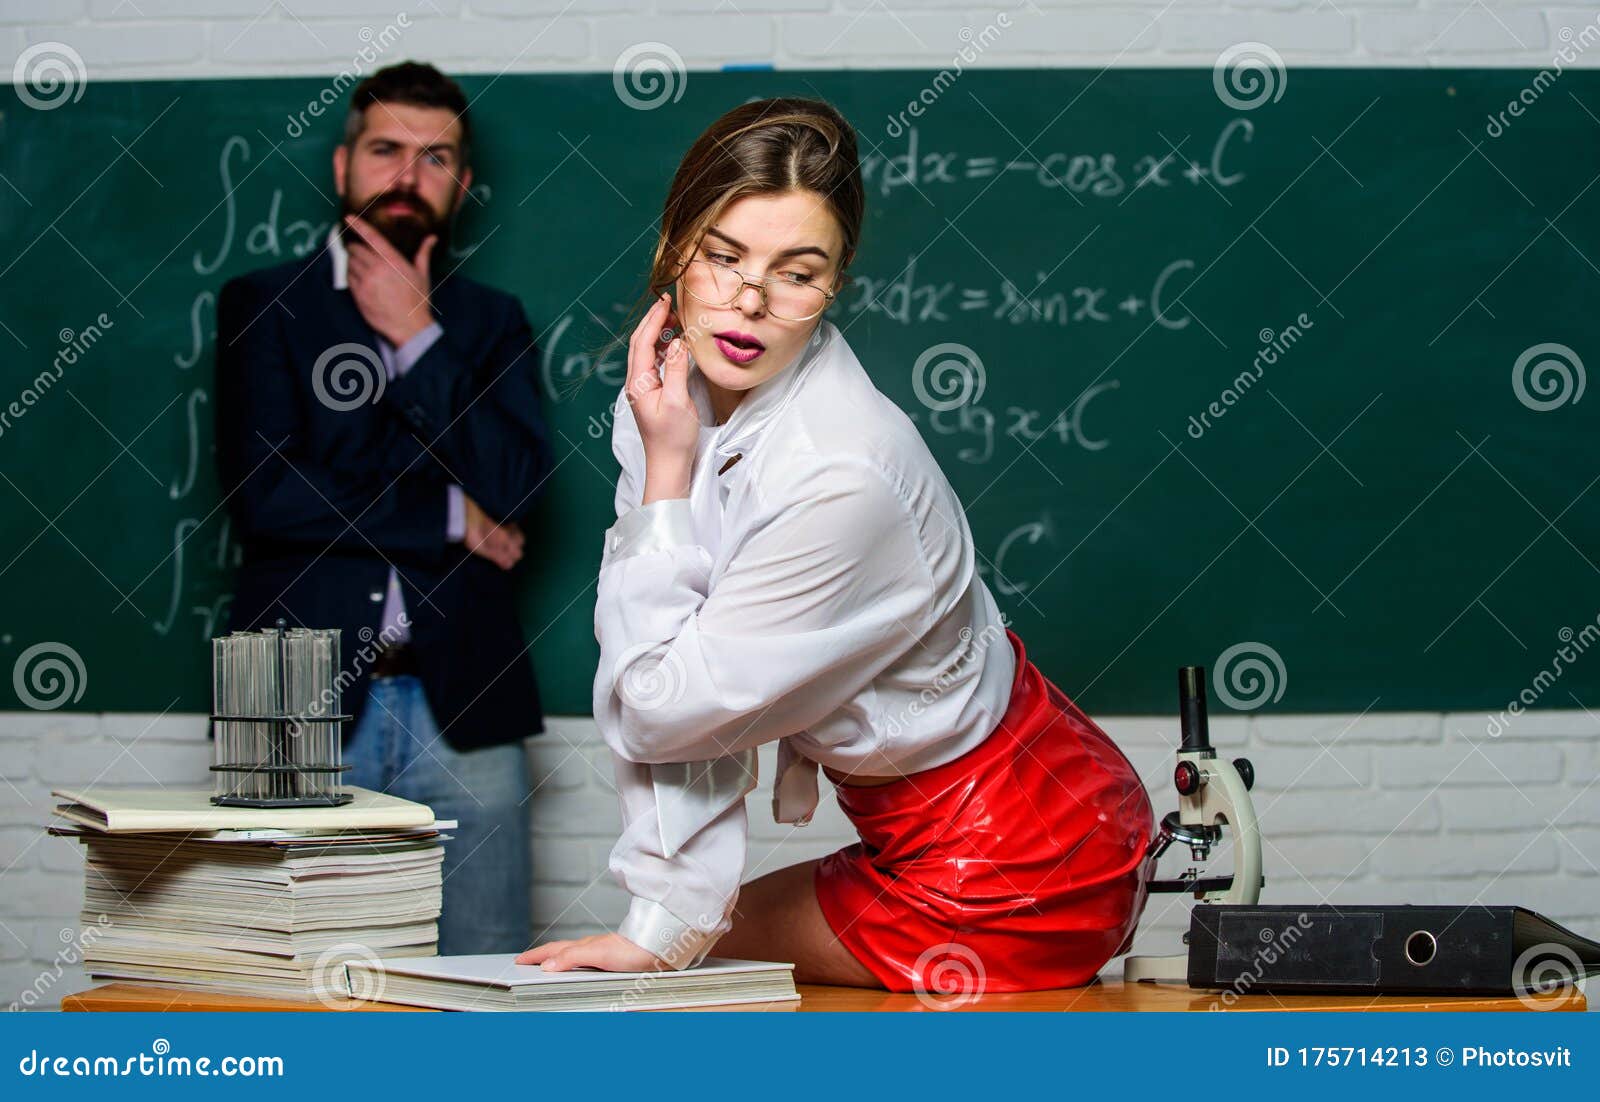 bruce padron share sexy teacher in class photos